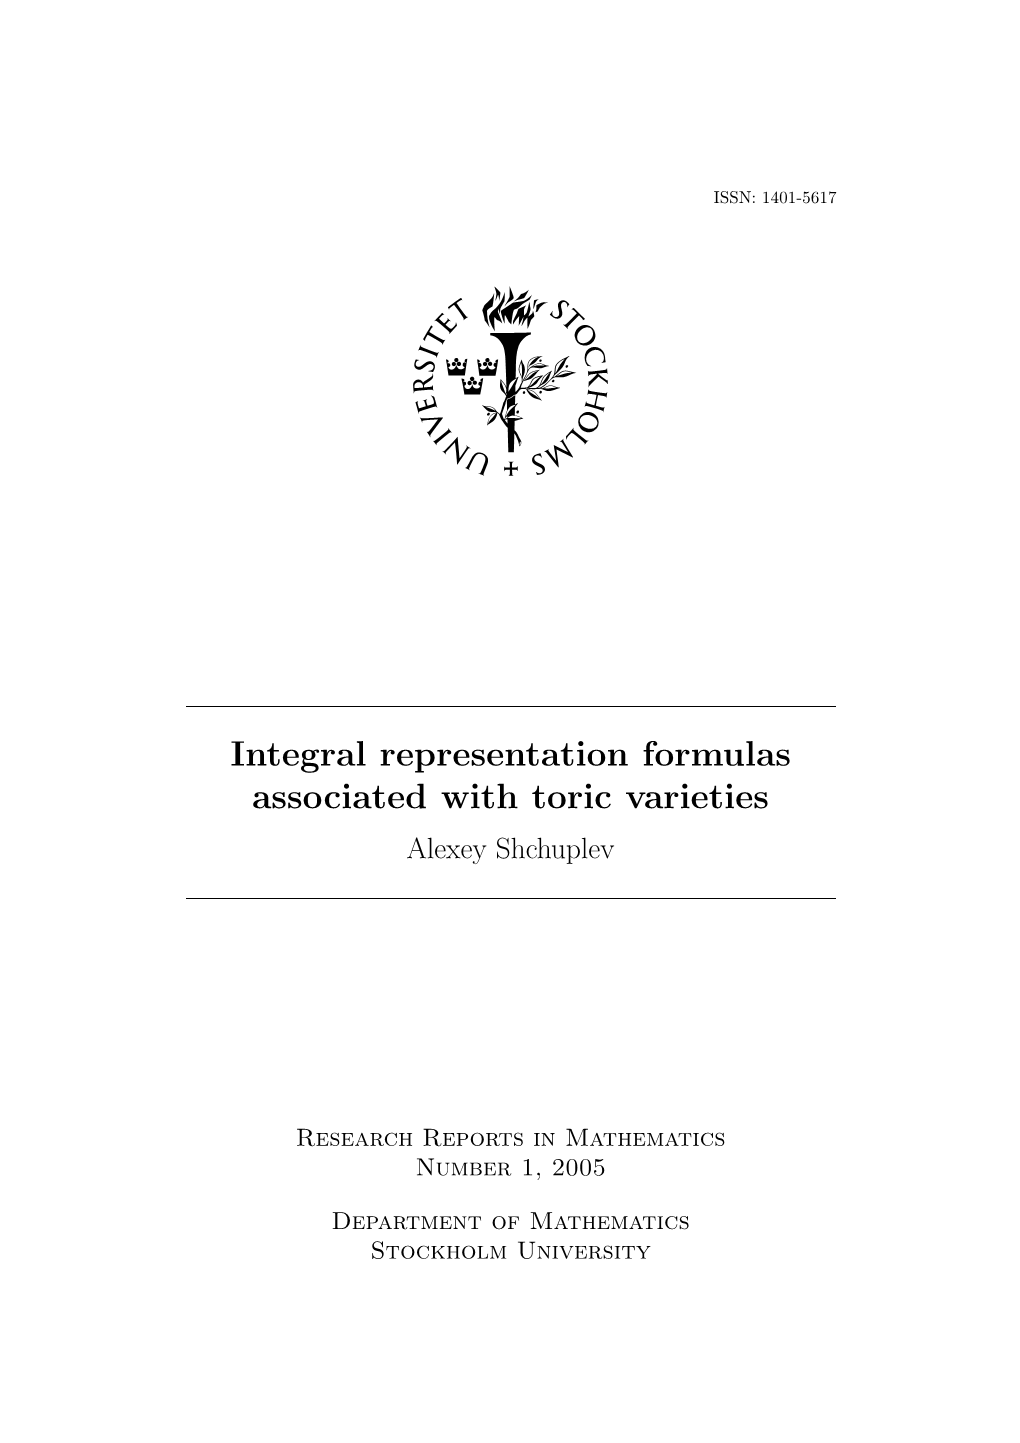 Integral Representation Formulas Associated with Toric Varieties Alexey Shchuplev